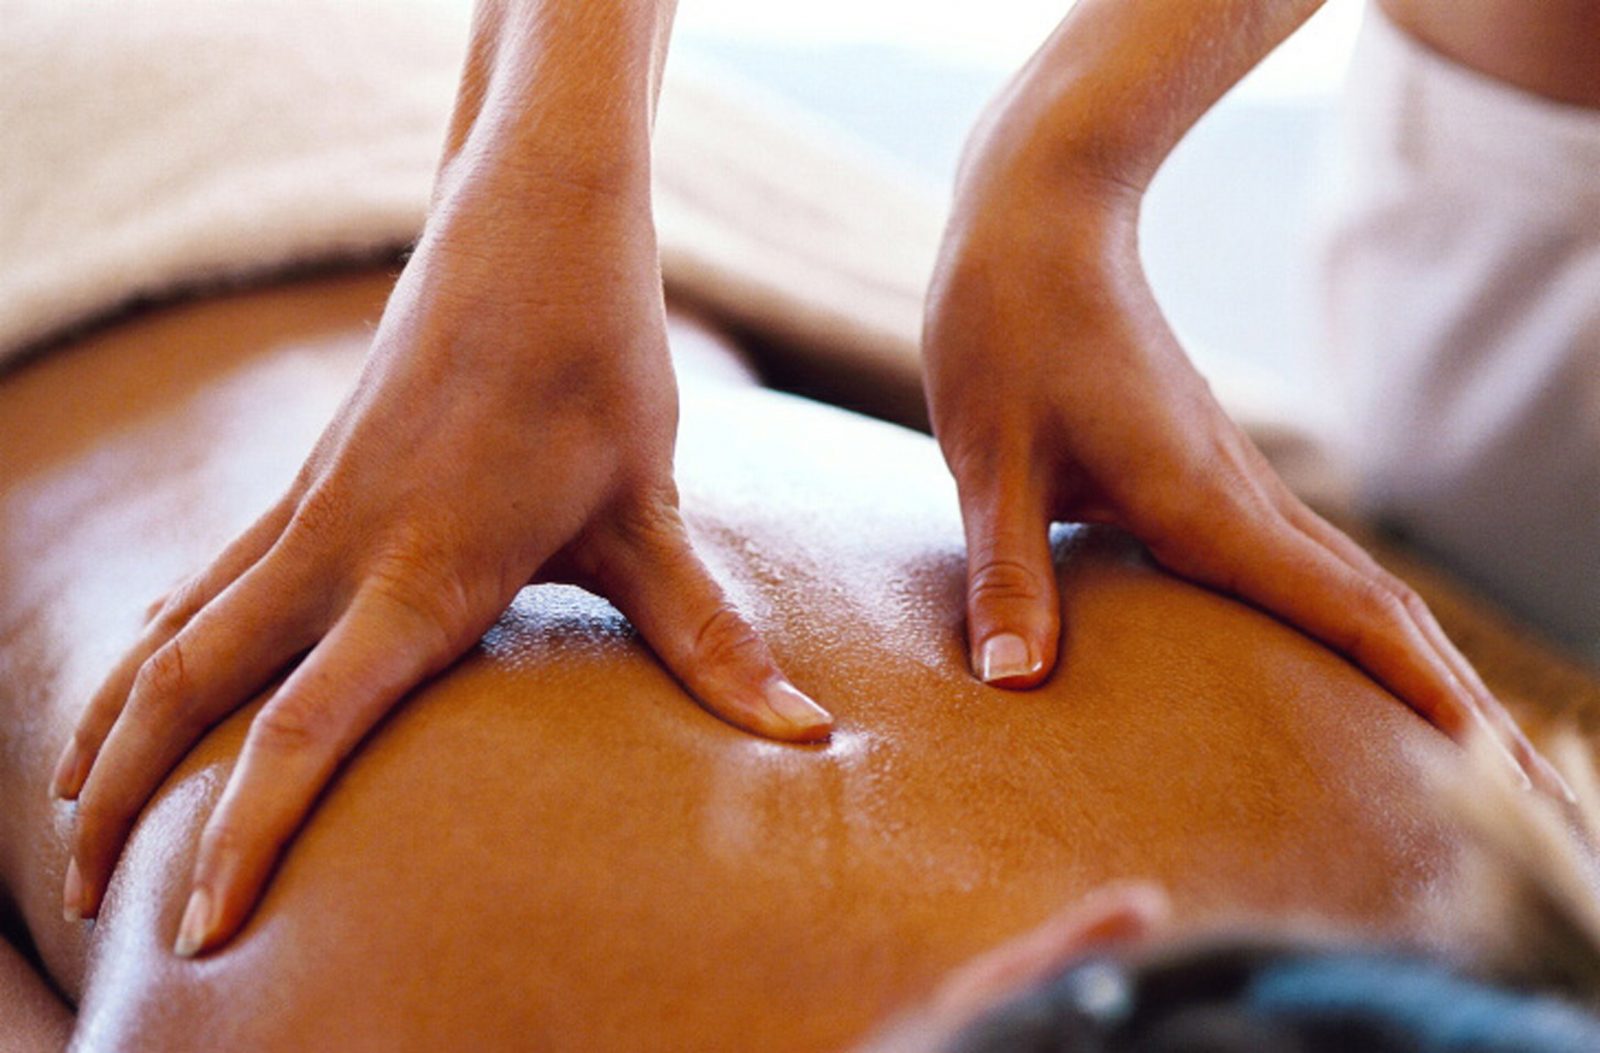 Massage giúp dầu dừa thẩm thấu sâu trong da